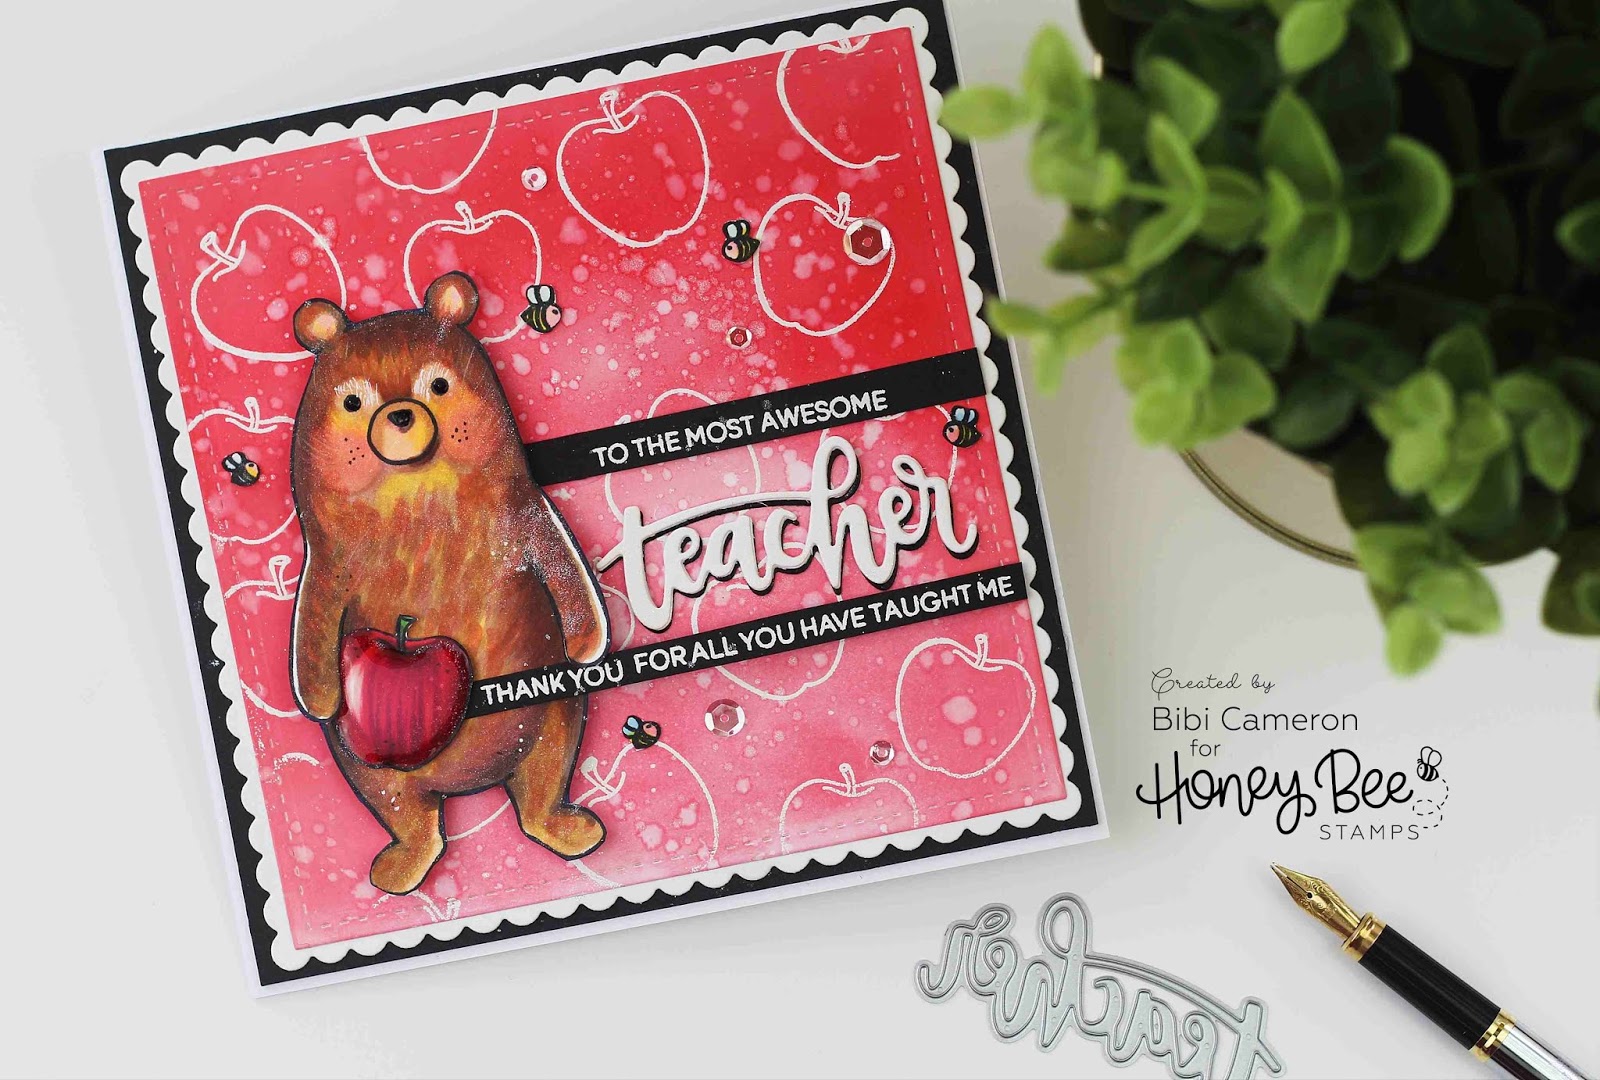 Honey Bee Stamps and Heffy Doodle Collaboration Instagram Hop + Giveaway